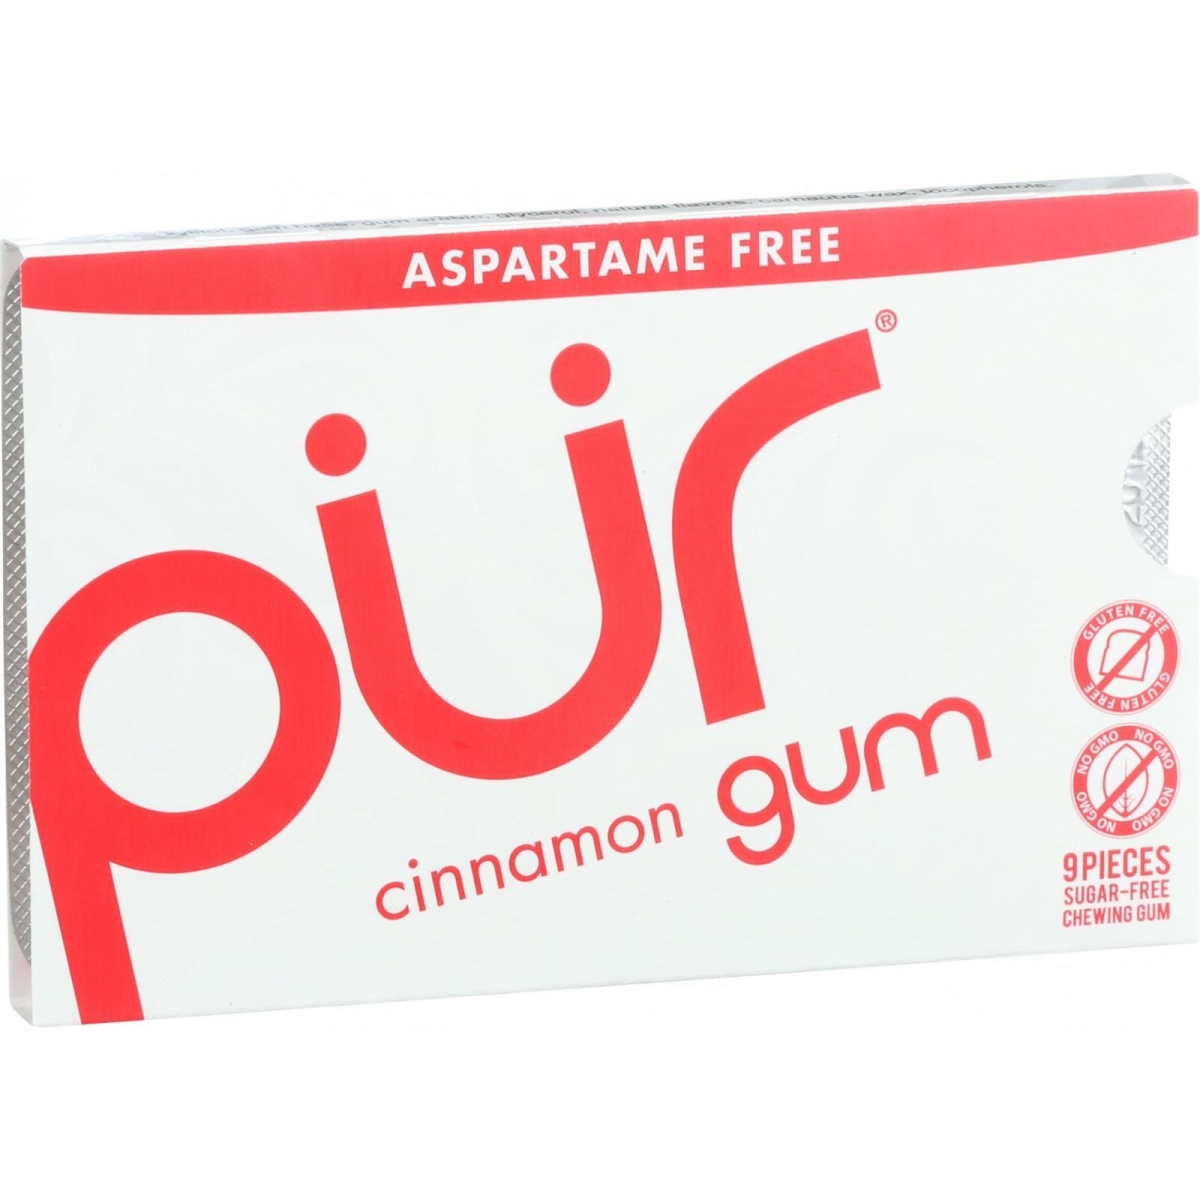 1608454 12.6 G Cinnamon Chewing Gum - Aspartame Free - 9 Pieces, Case Of 12